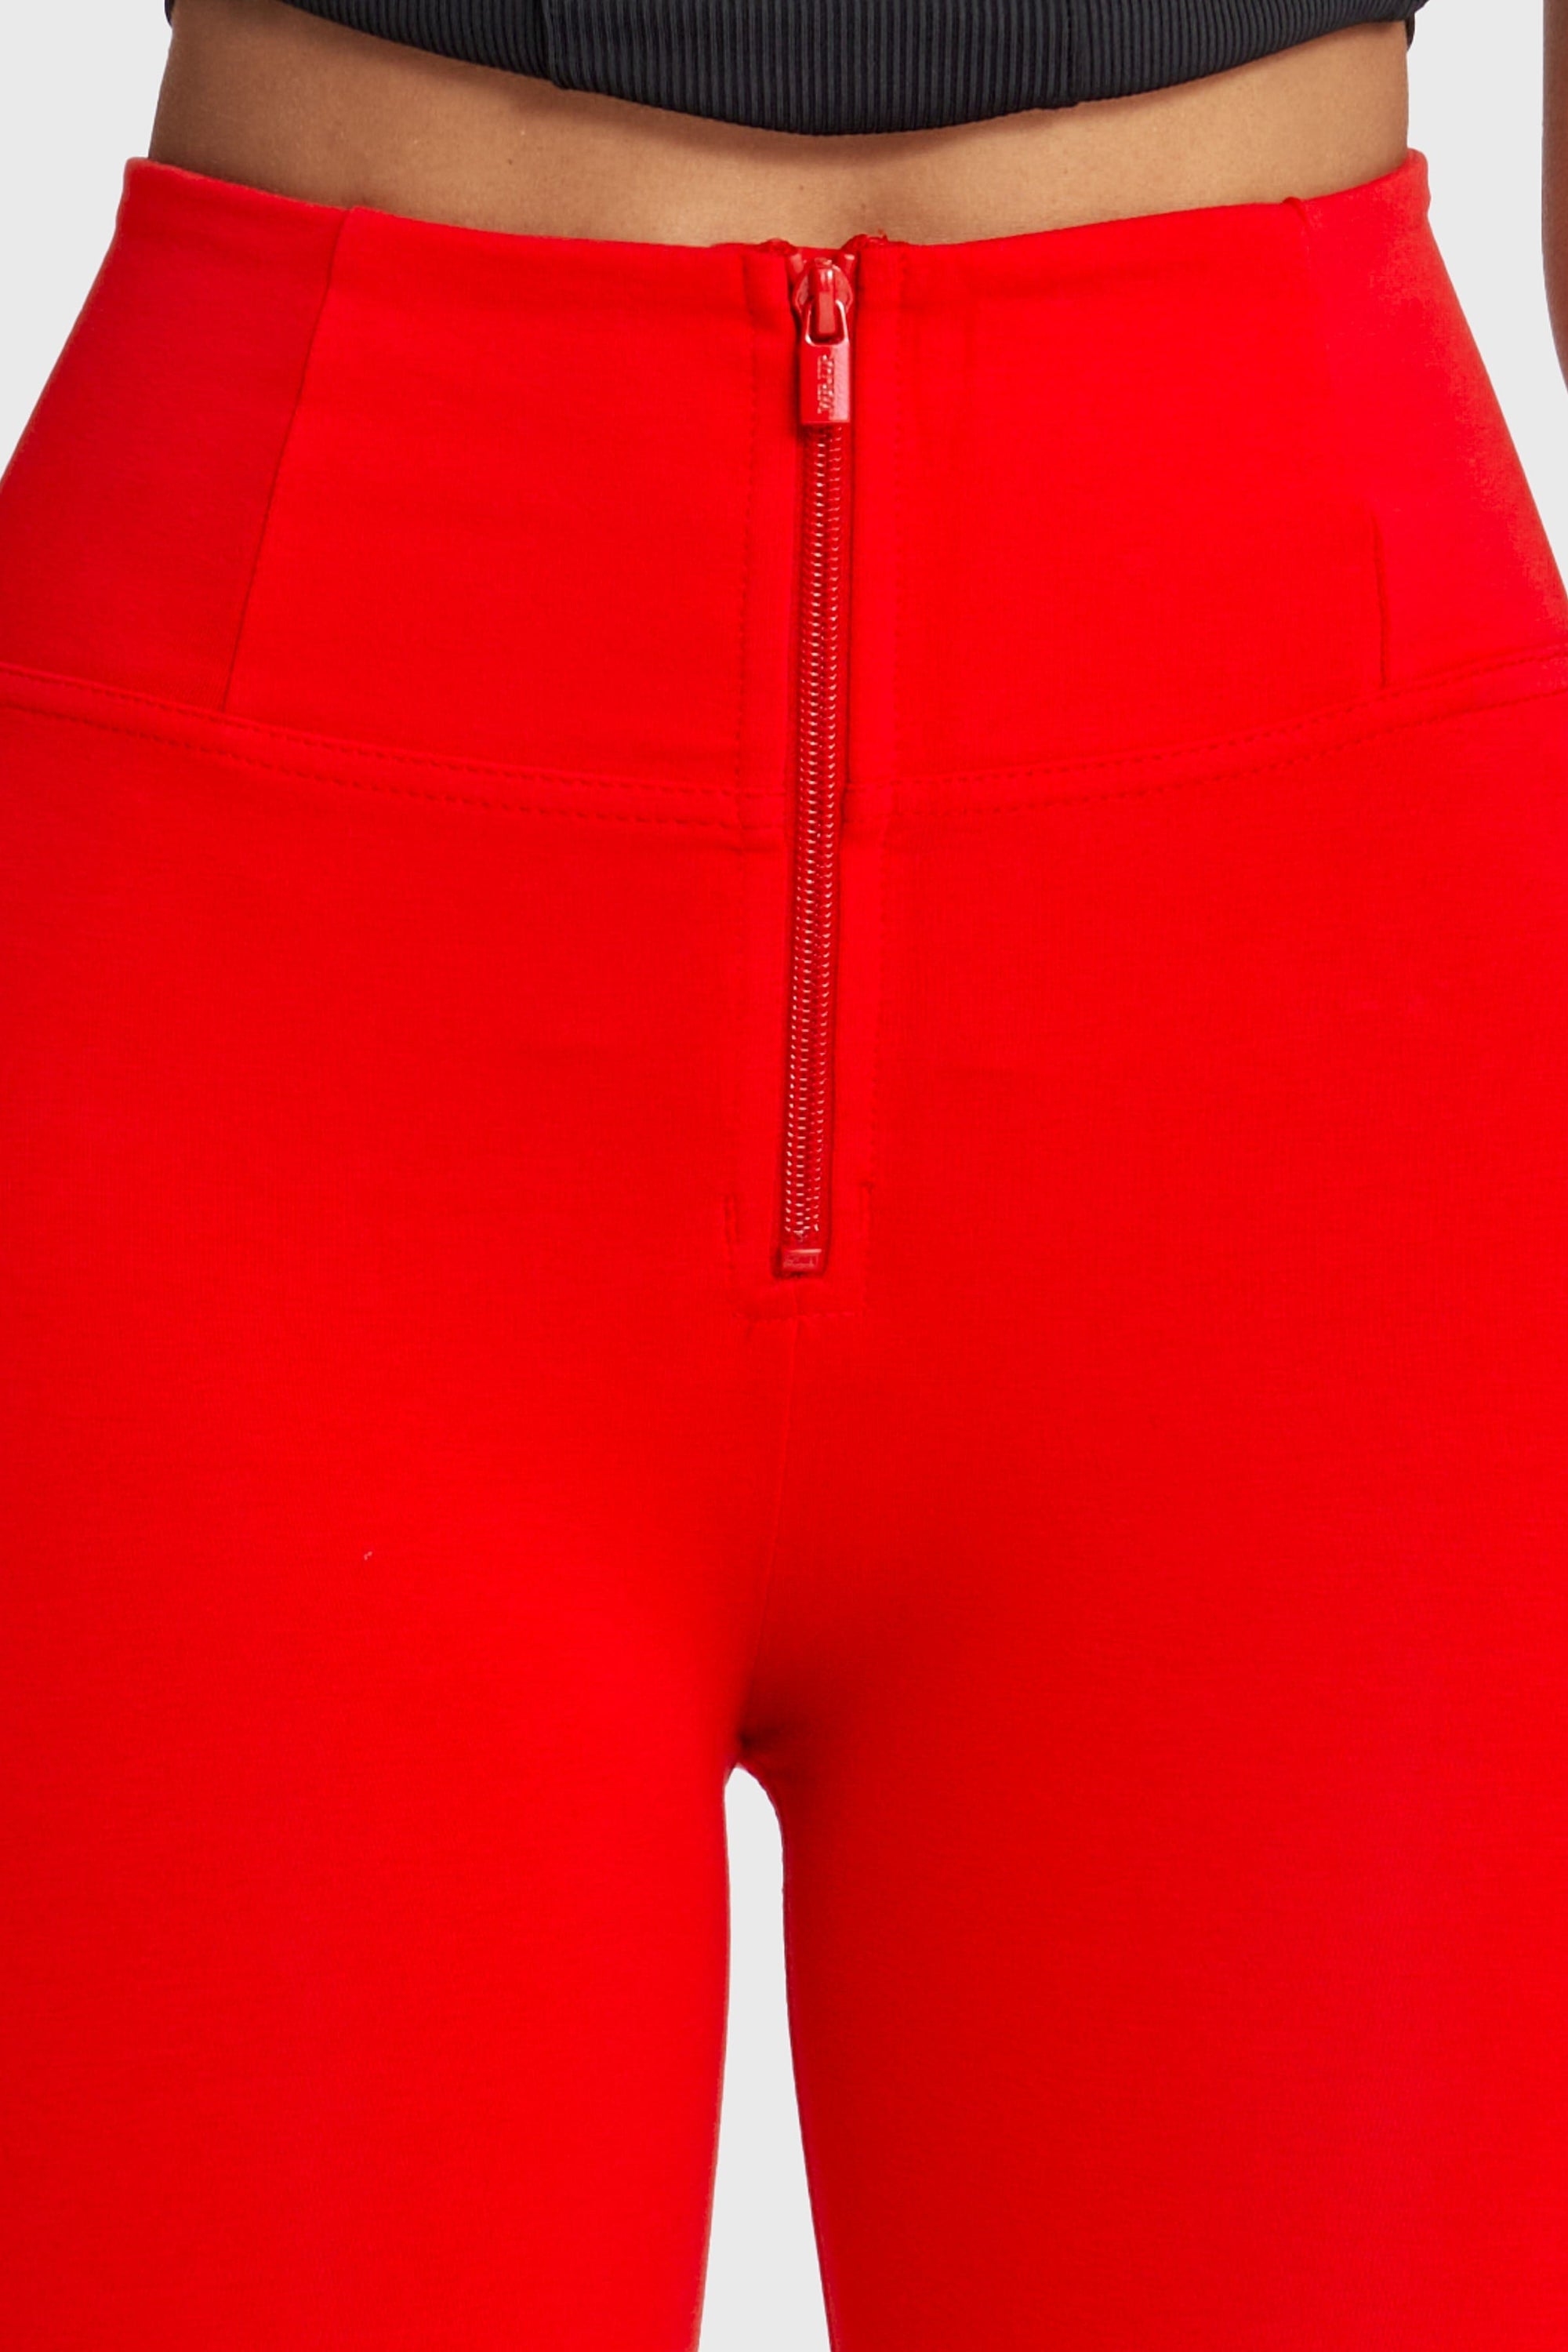 WR.UP® Fashion - Cintura alta - Largo completo - Rojo  11